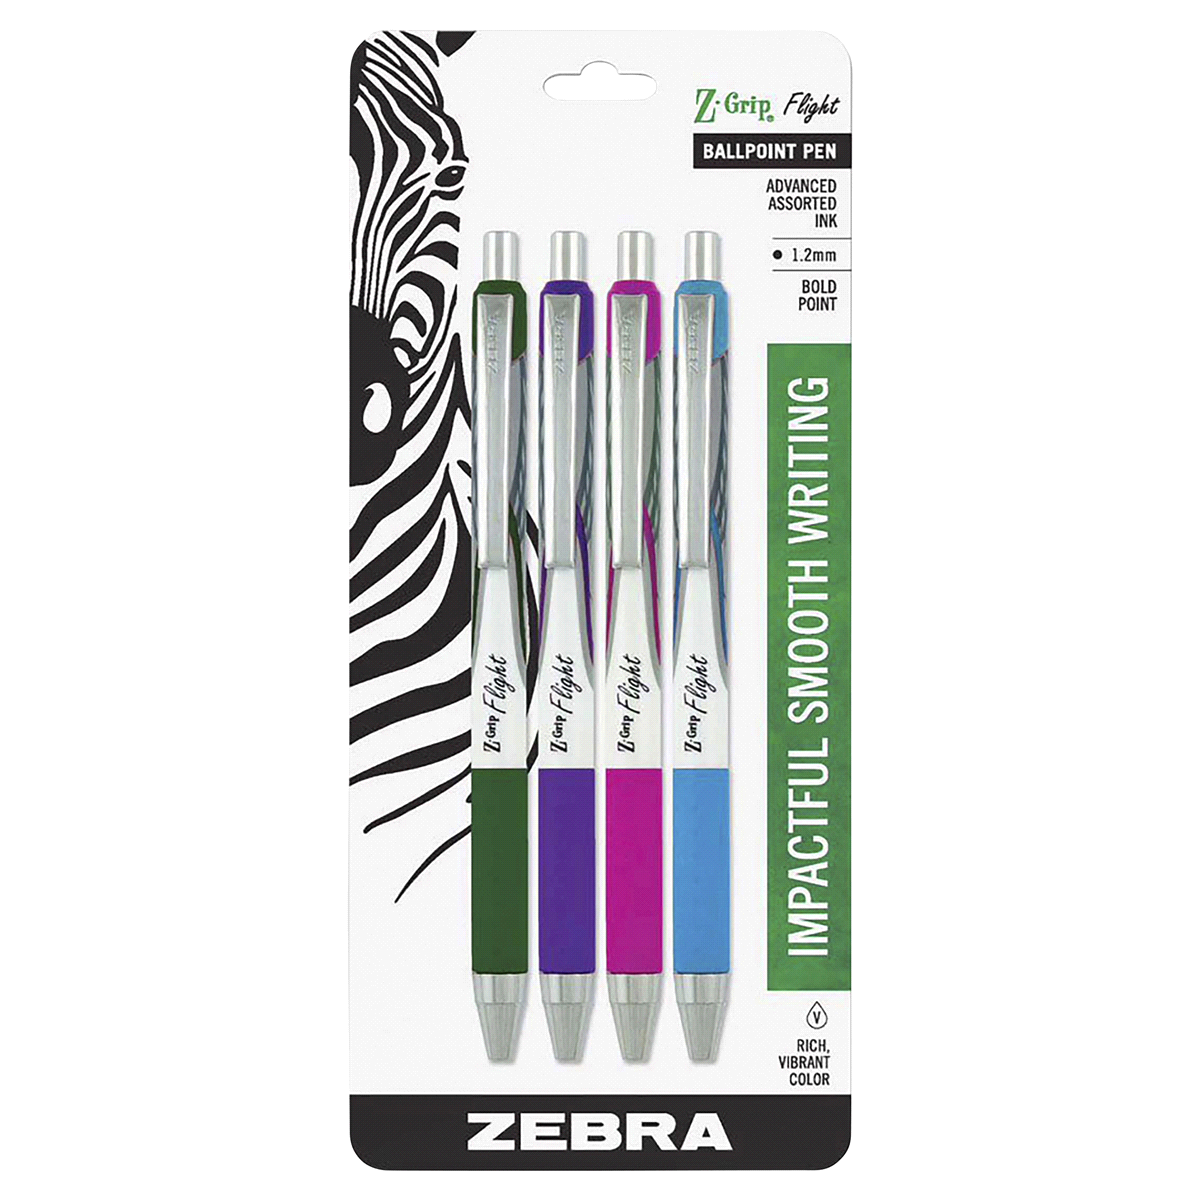 slide 1 of 1, Zebra Zgrip Flight Bold Point Pen Multicolor, 4 ct